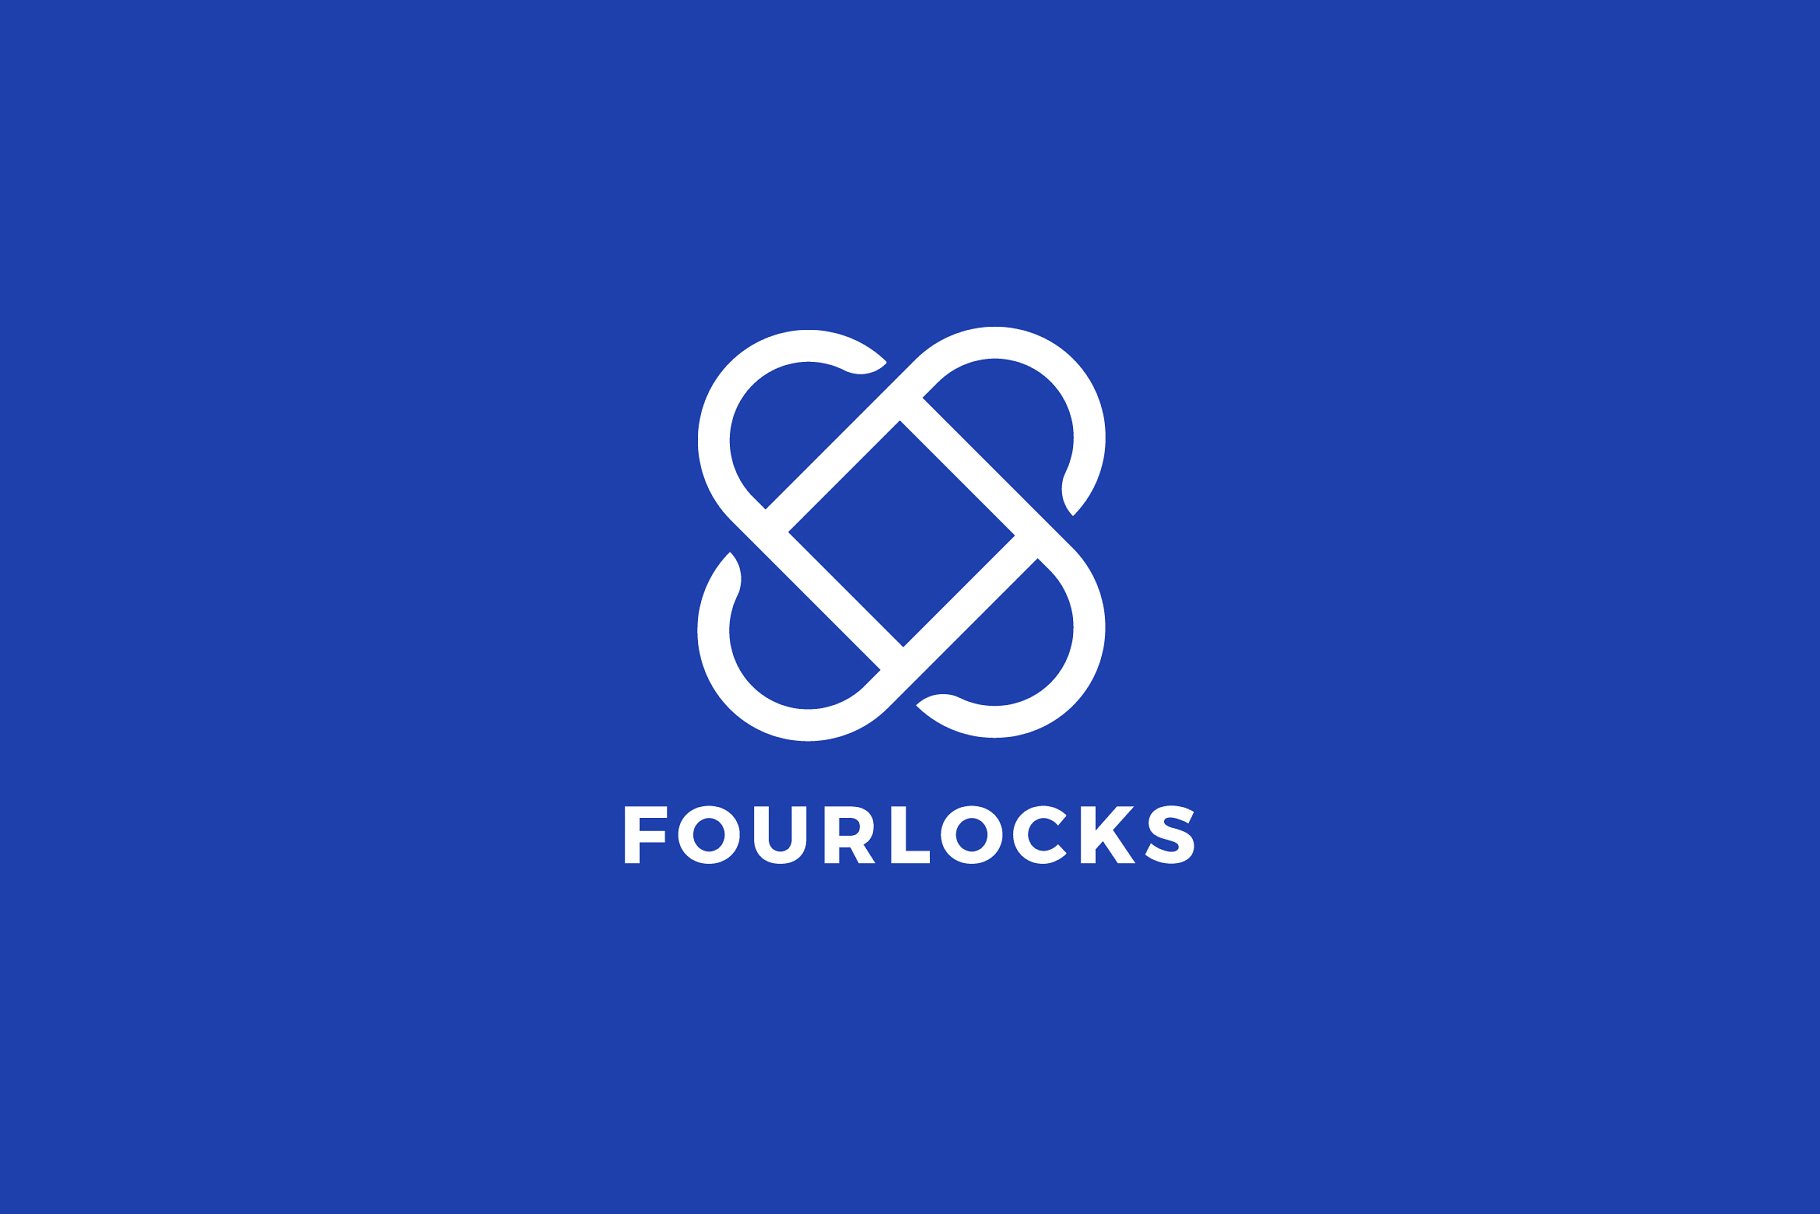 交叉环形跑道图形Logo模板 Four Locks Logo Template插图(3)